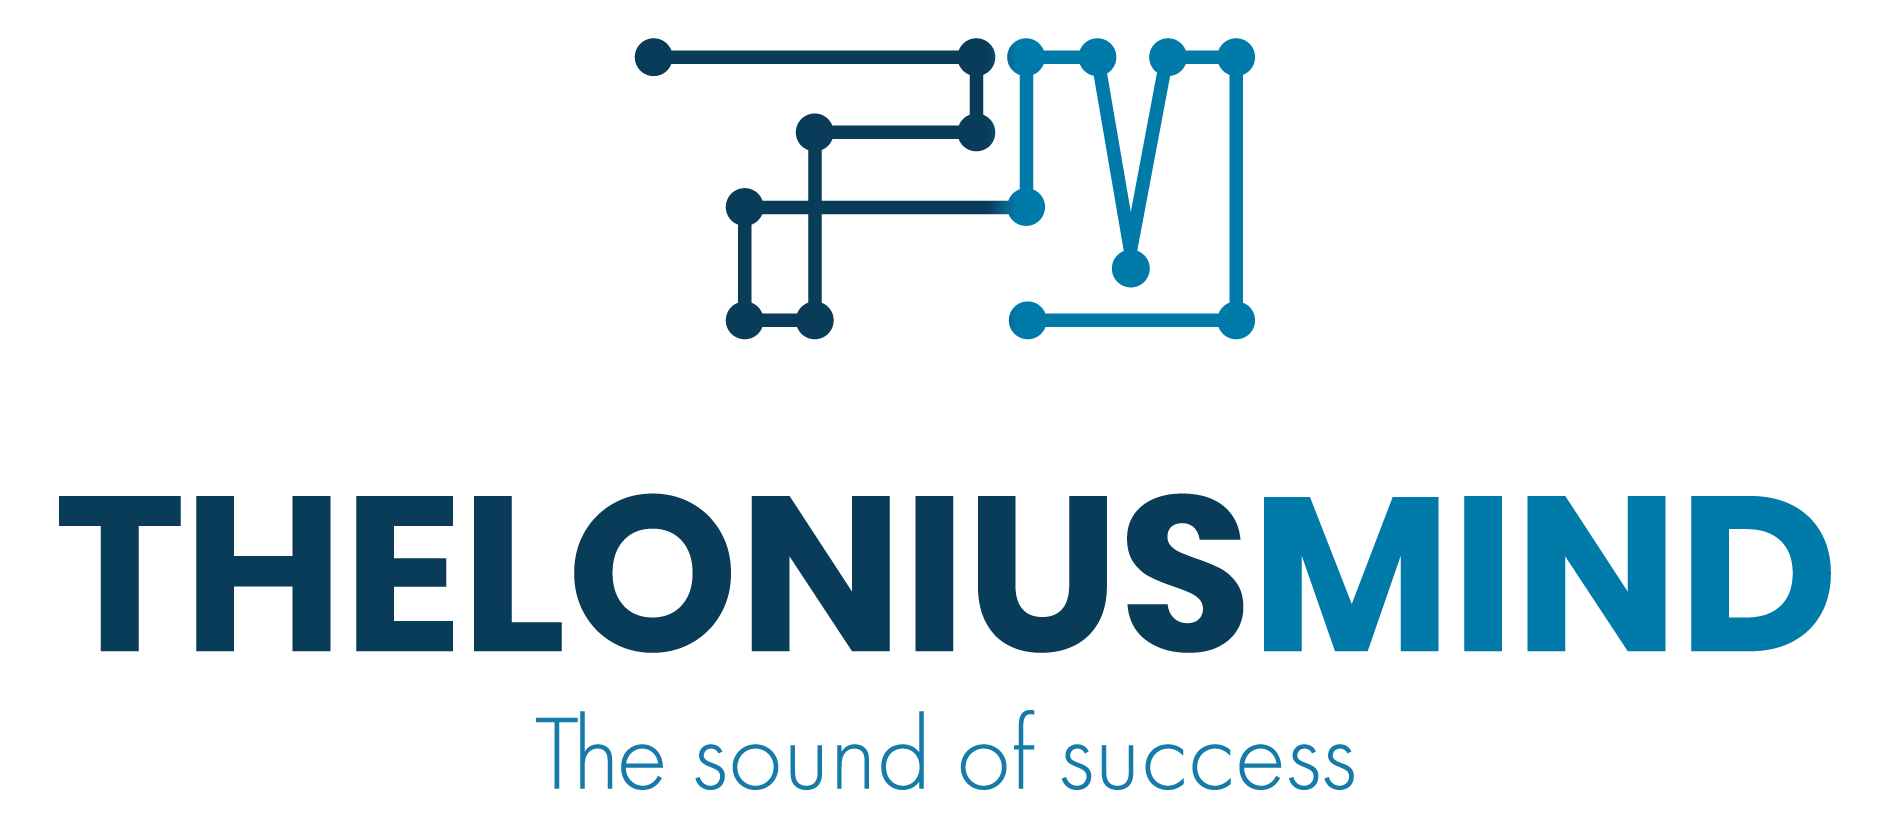 Thelonius Mind Logo